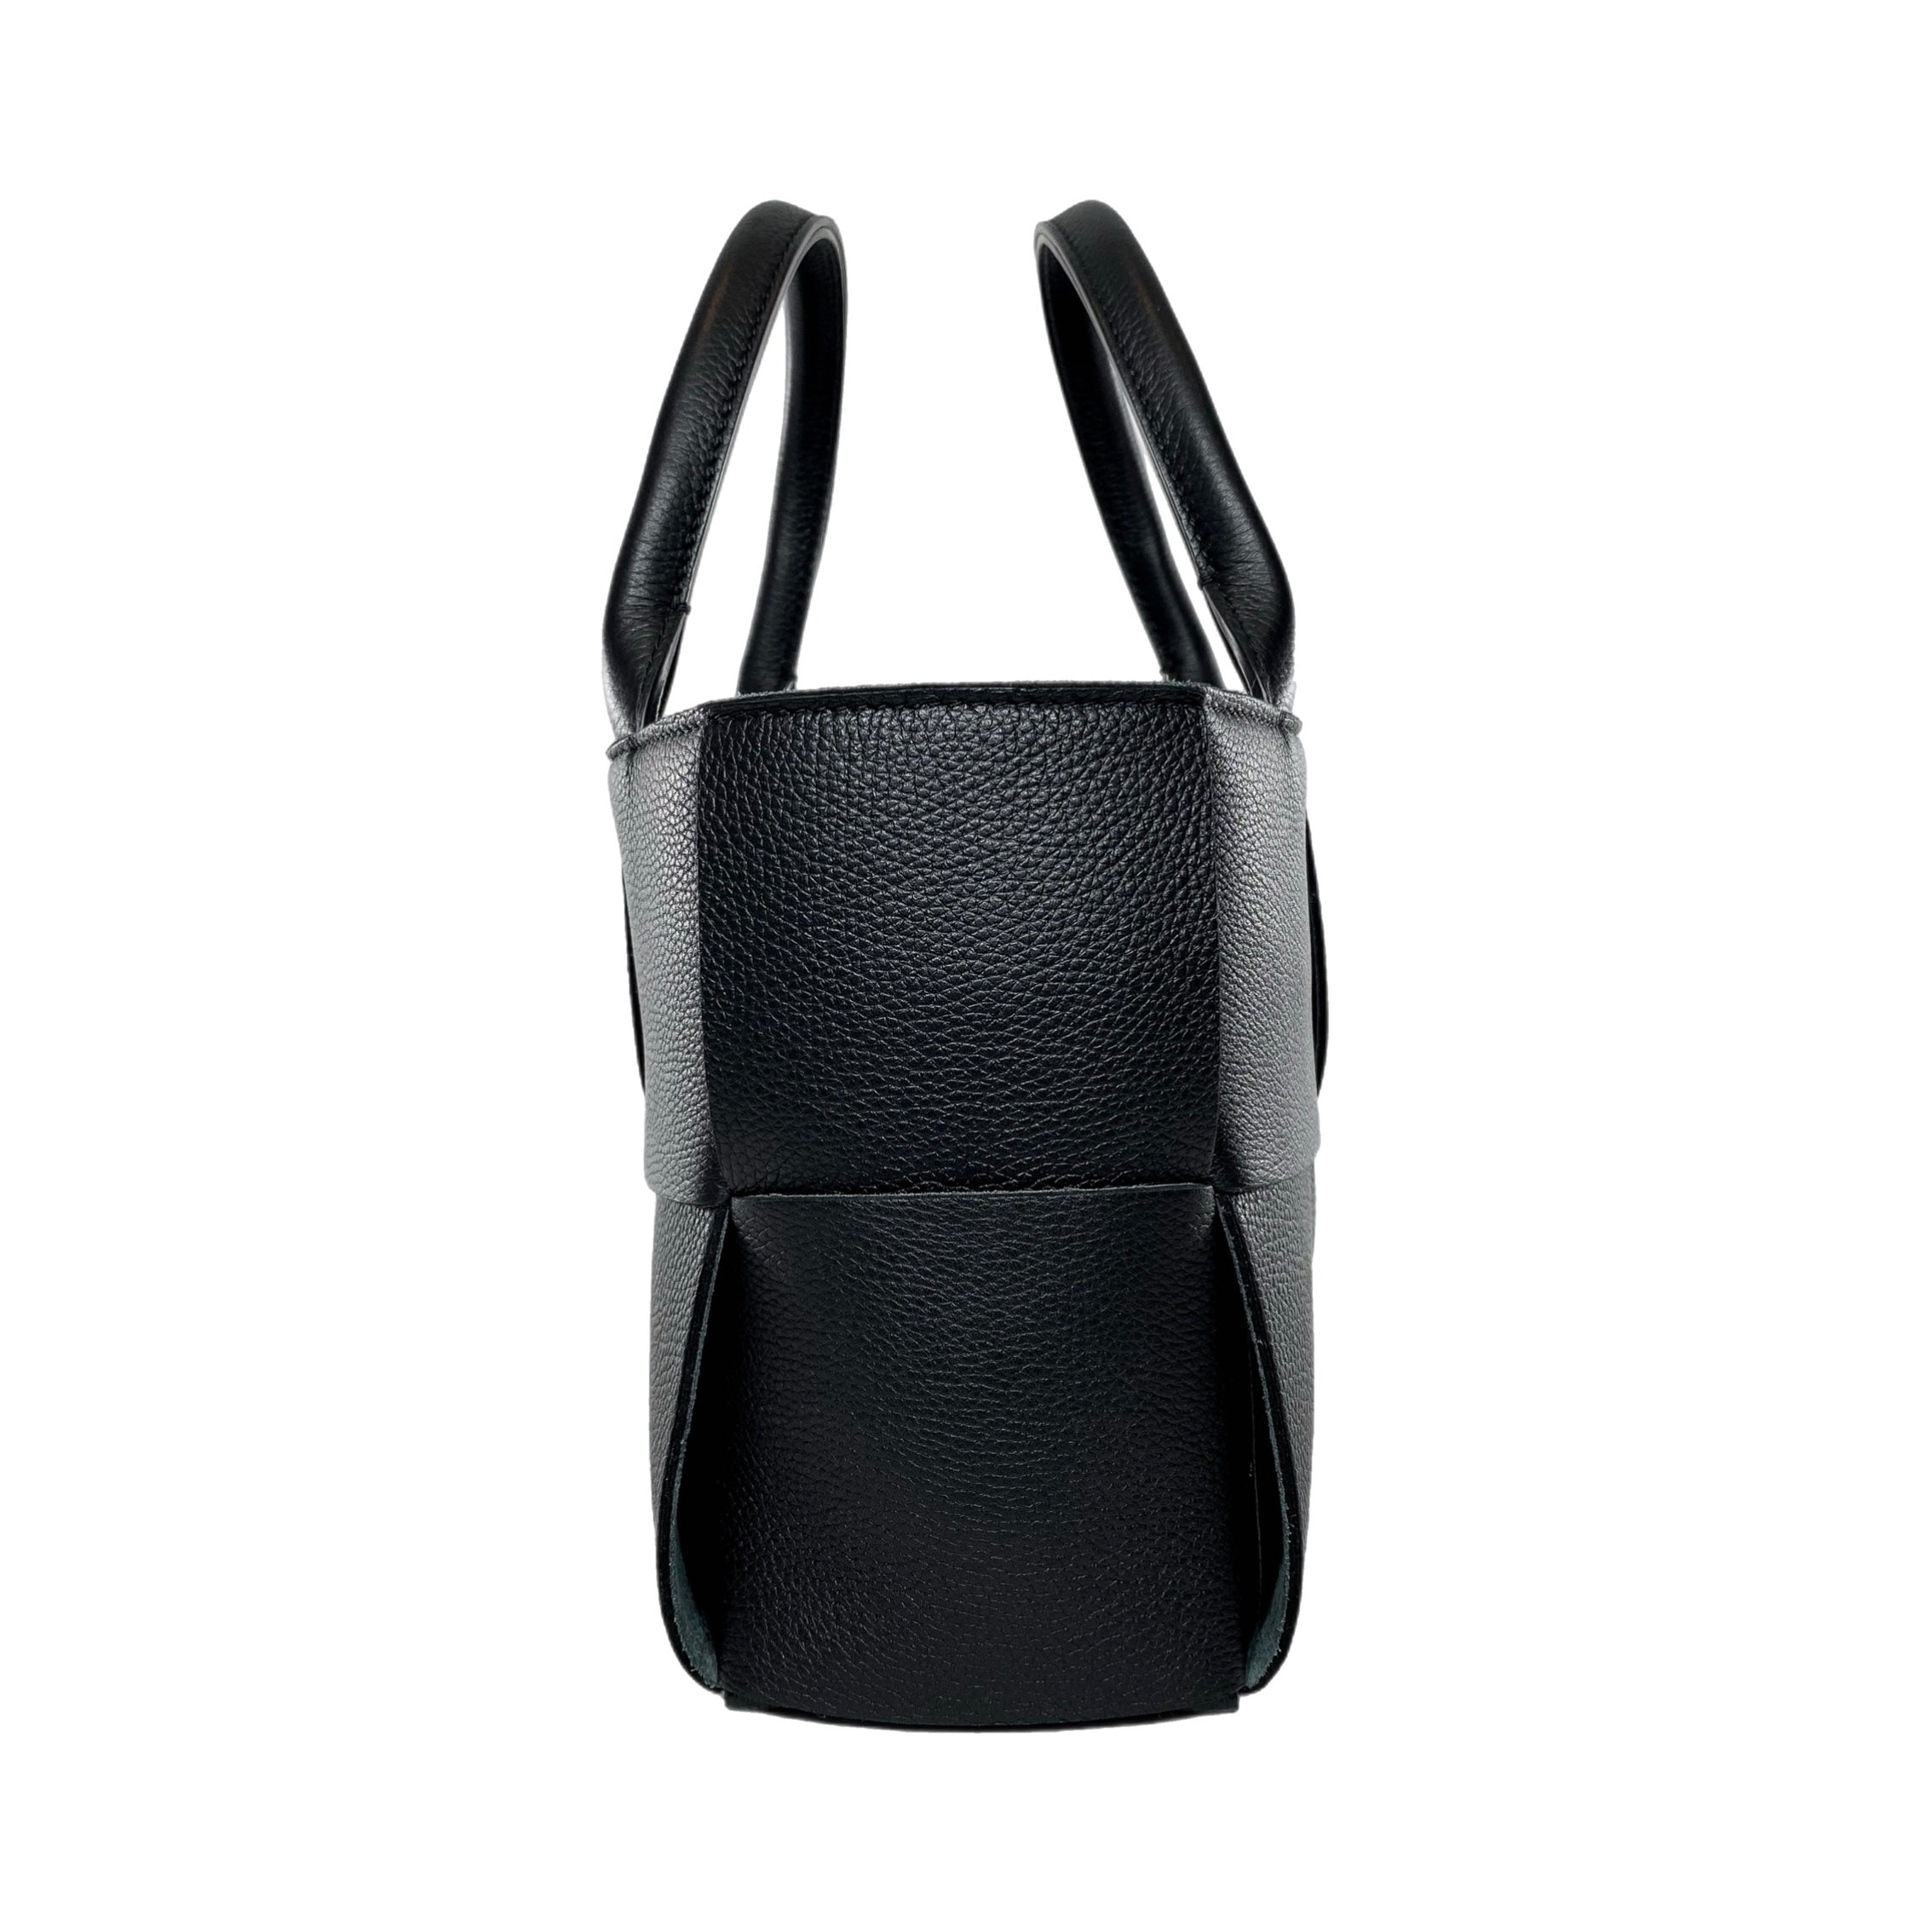 Bottega Veneta Black Mini Arco Tote Bag